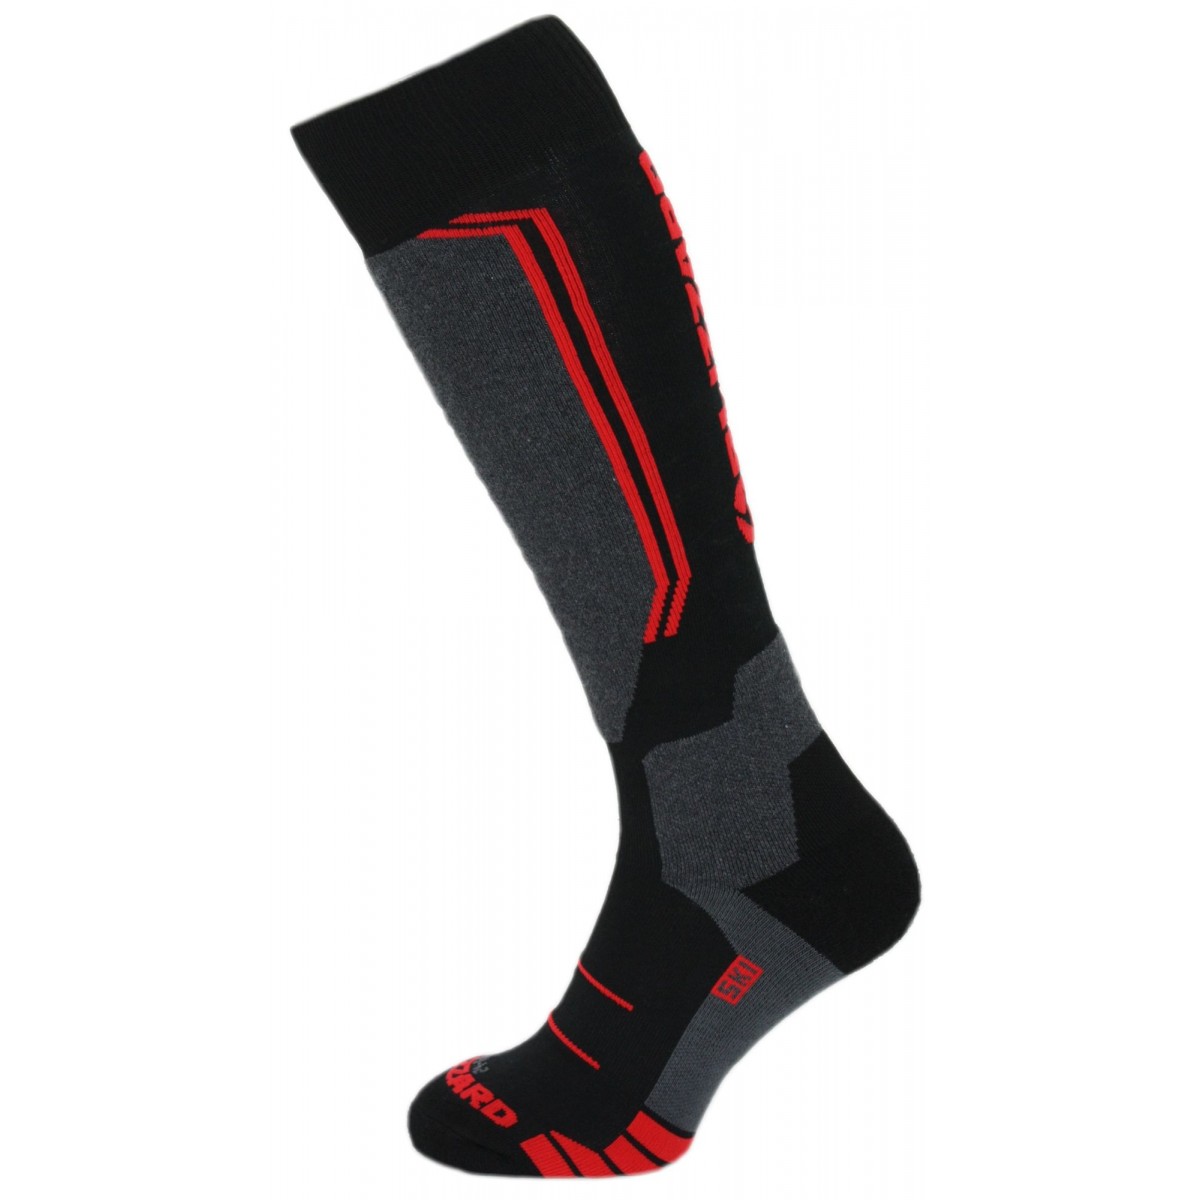 Носки горнолыжные Blizzard Allround Wool Ski Socks Black/Anthracite/Red носки accapi ski touch black anthracite унисекс 2022 23 h0945 0966